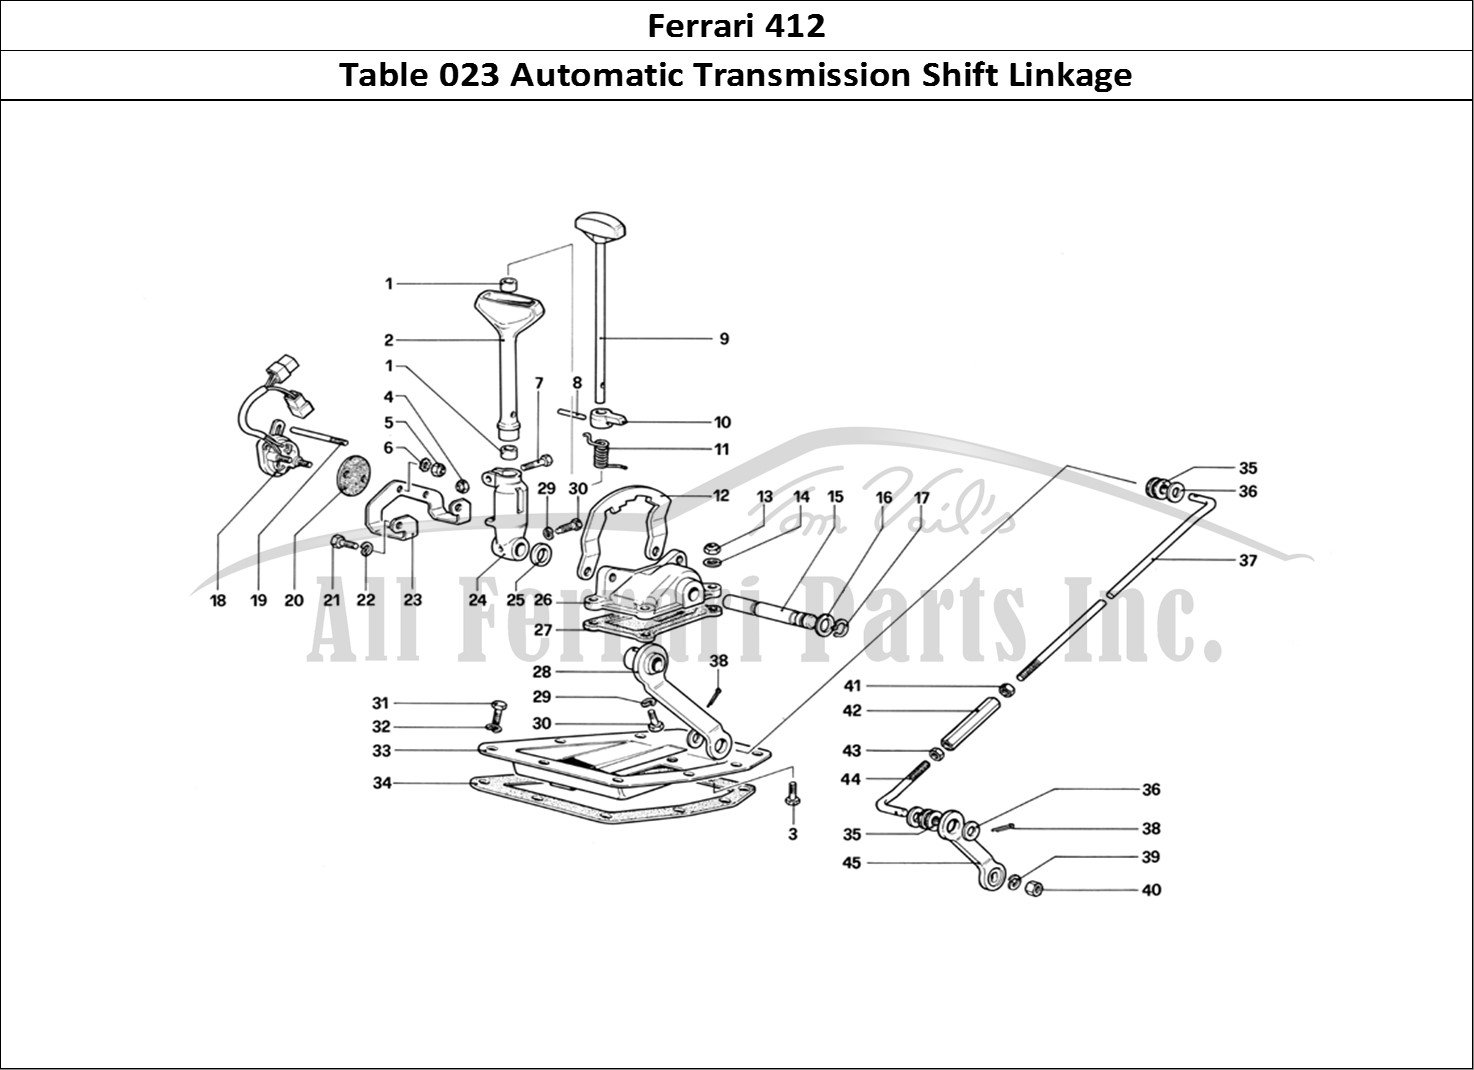 Ferrari Parts Ferrari 412 (Mechanical) Page 023 Outside Gearbox Controls